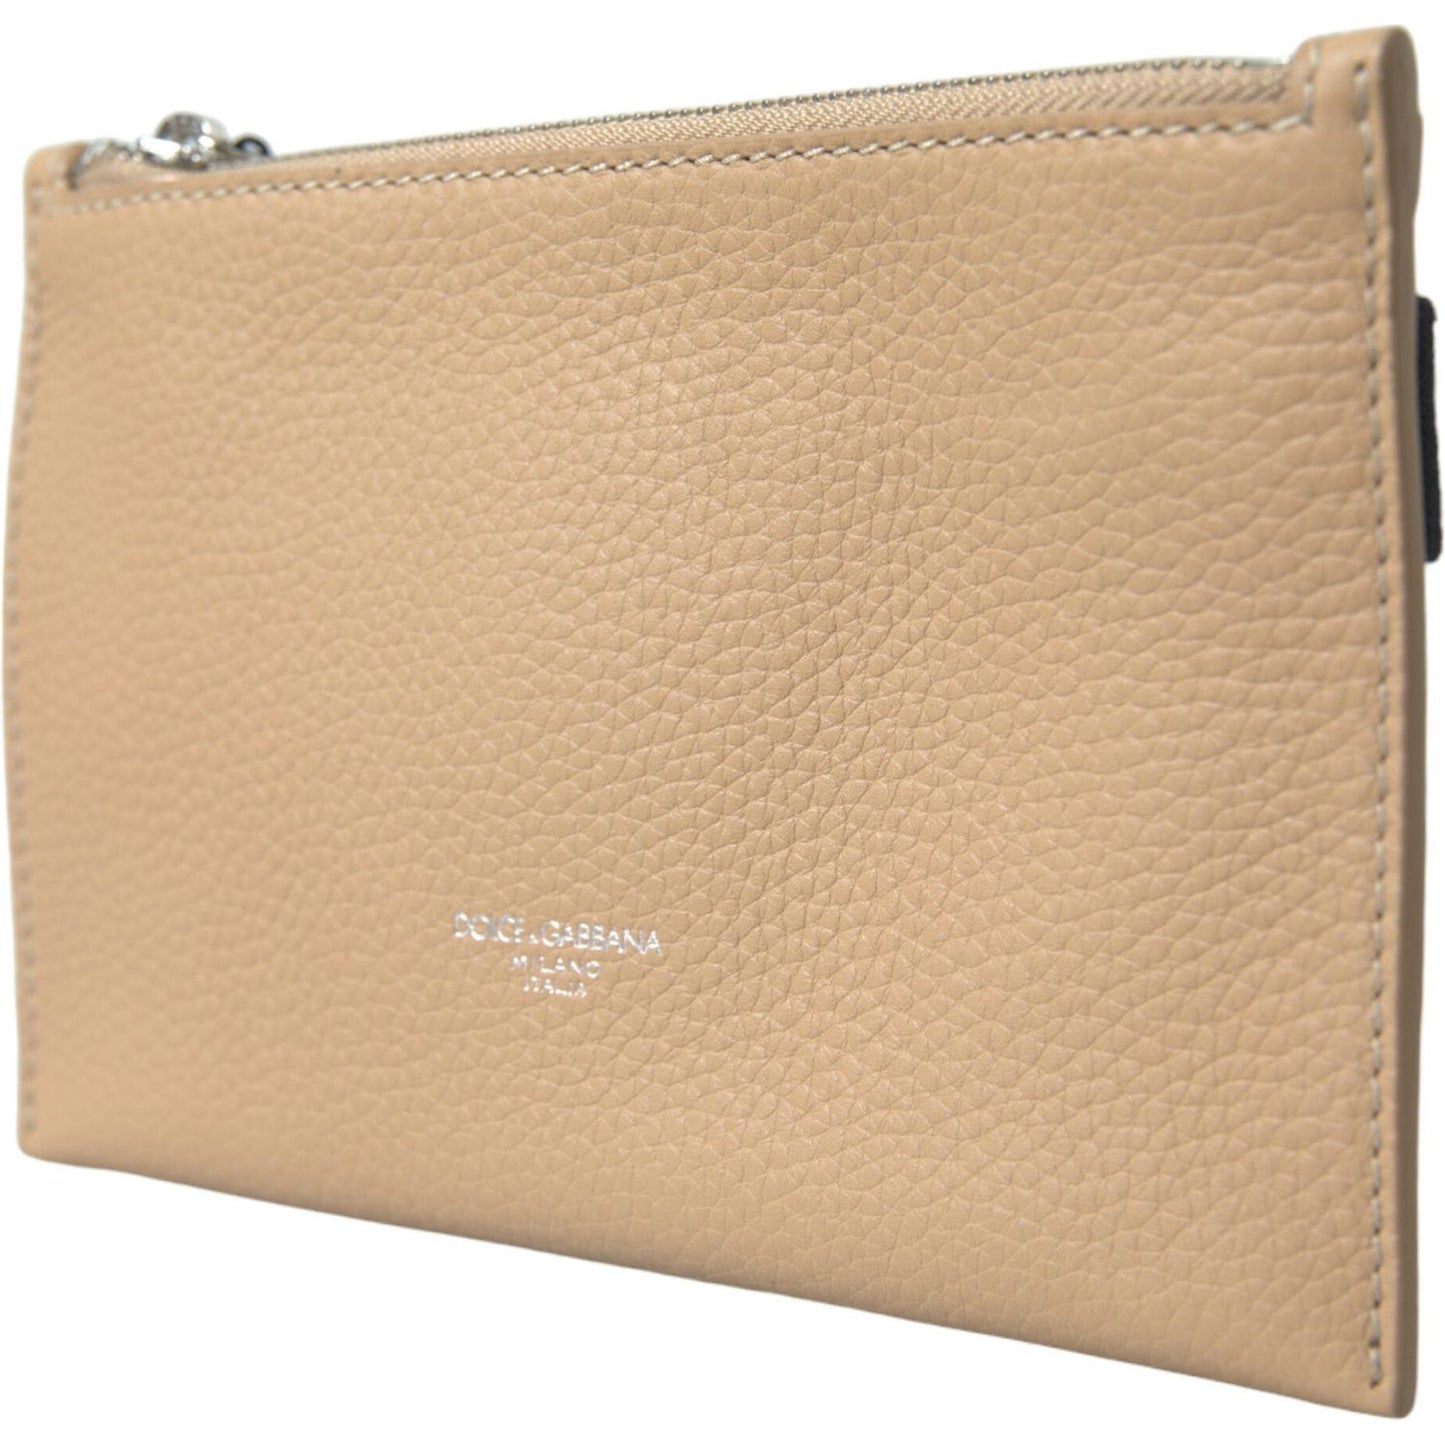 Dolce & Gabbana Elegance Redefined Beige Leather Belt Bag elegance-redefined-beige-leather-belt-bag